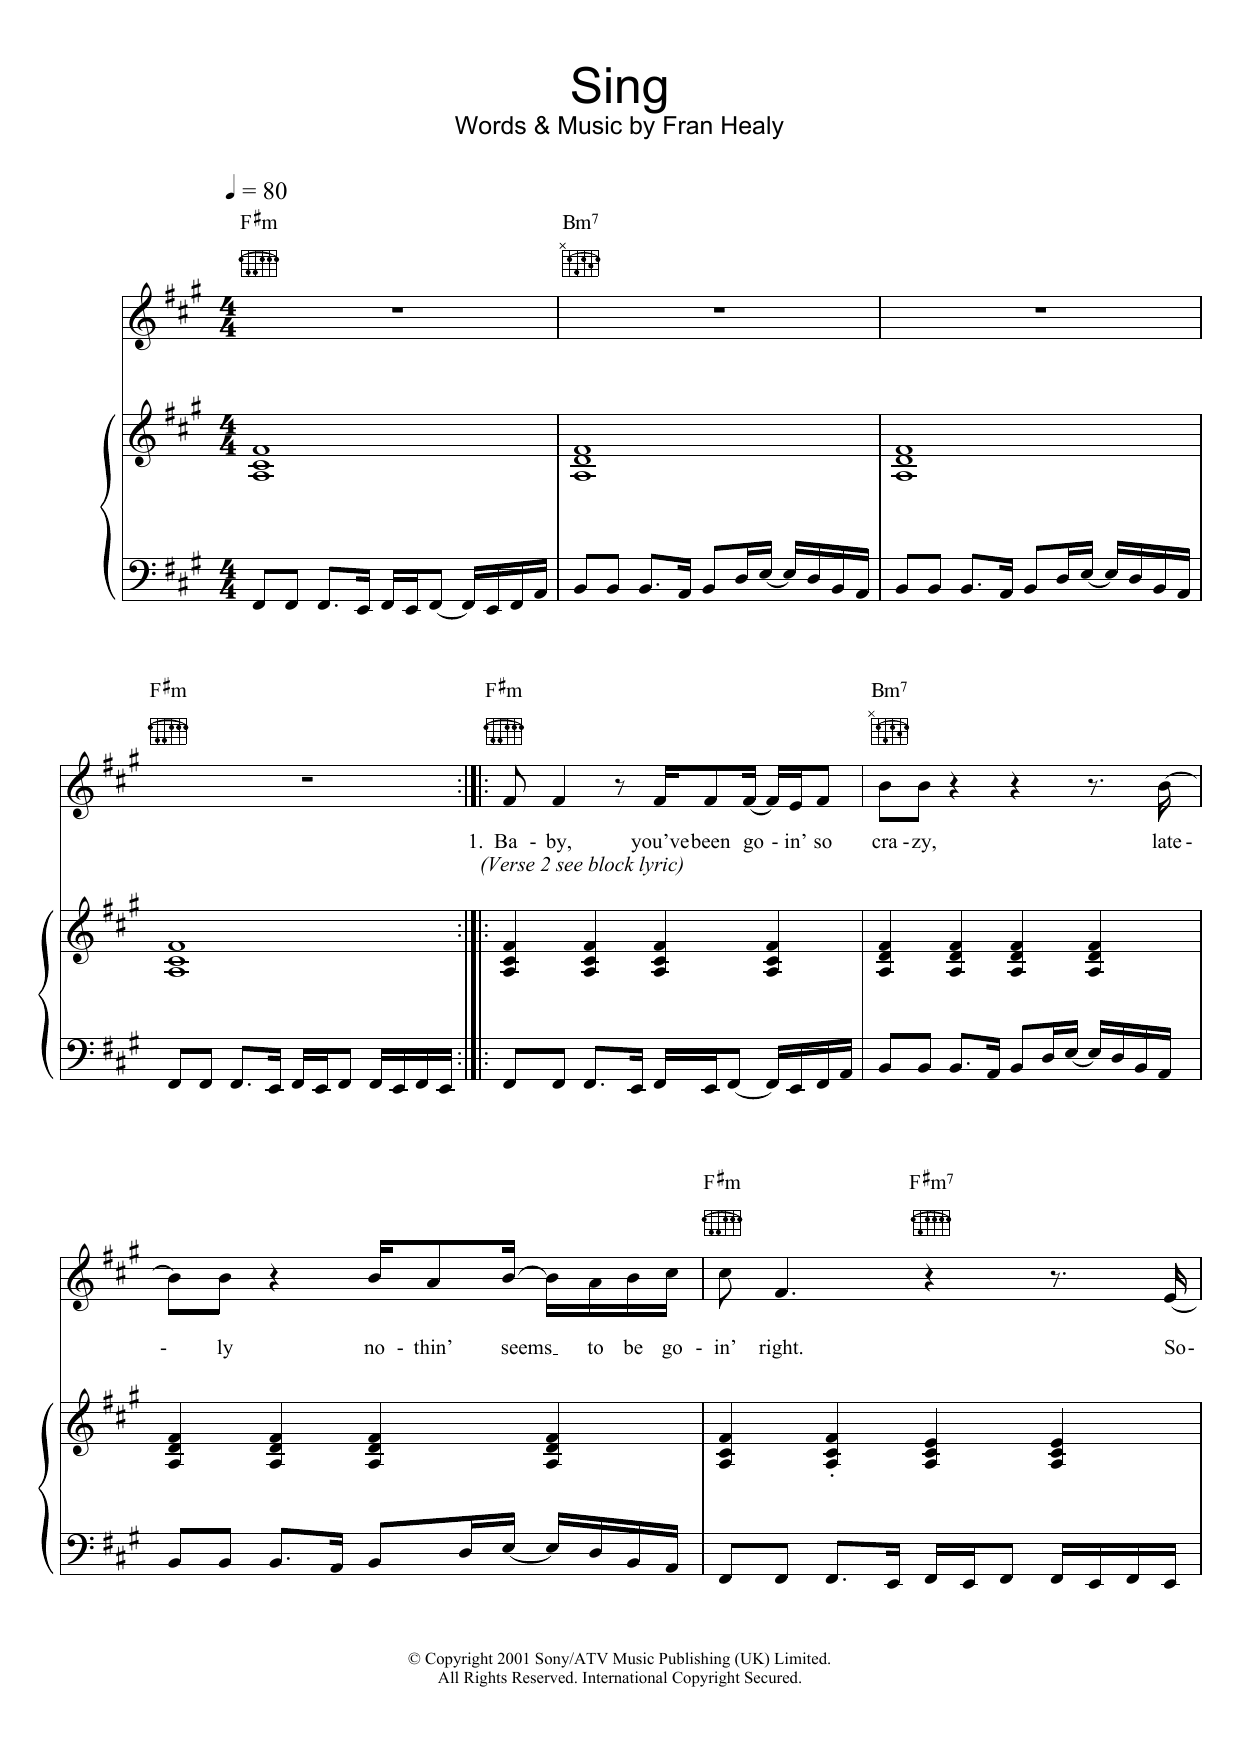 Travis Sing Sheet Music Notes & Chords for Melody Line, Lyrics & Chords - Download or Print PDF